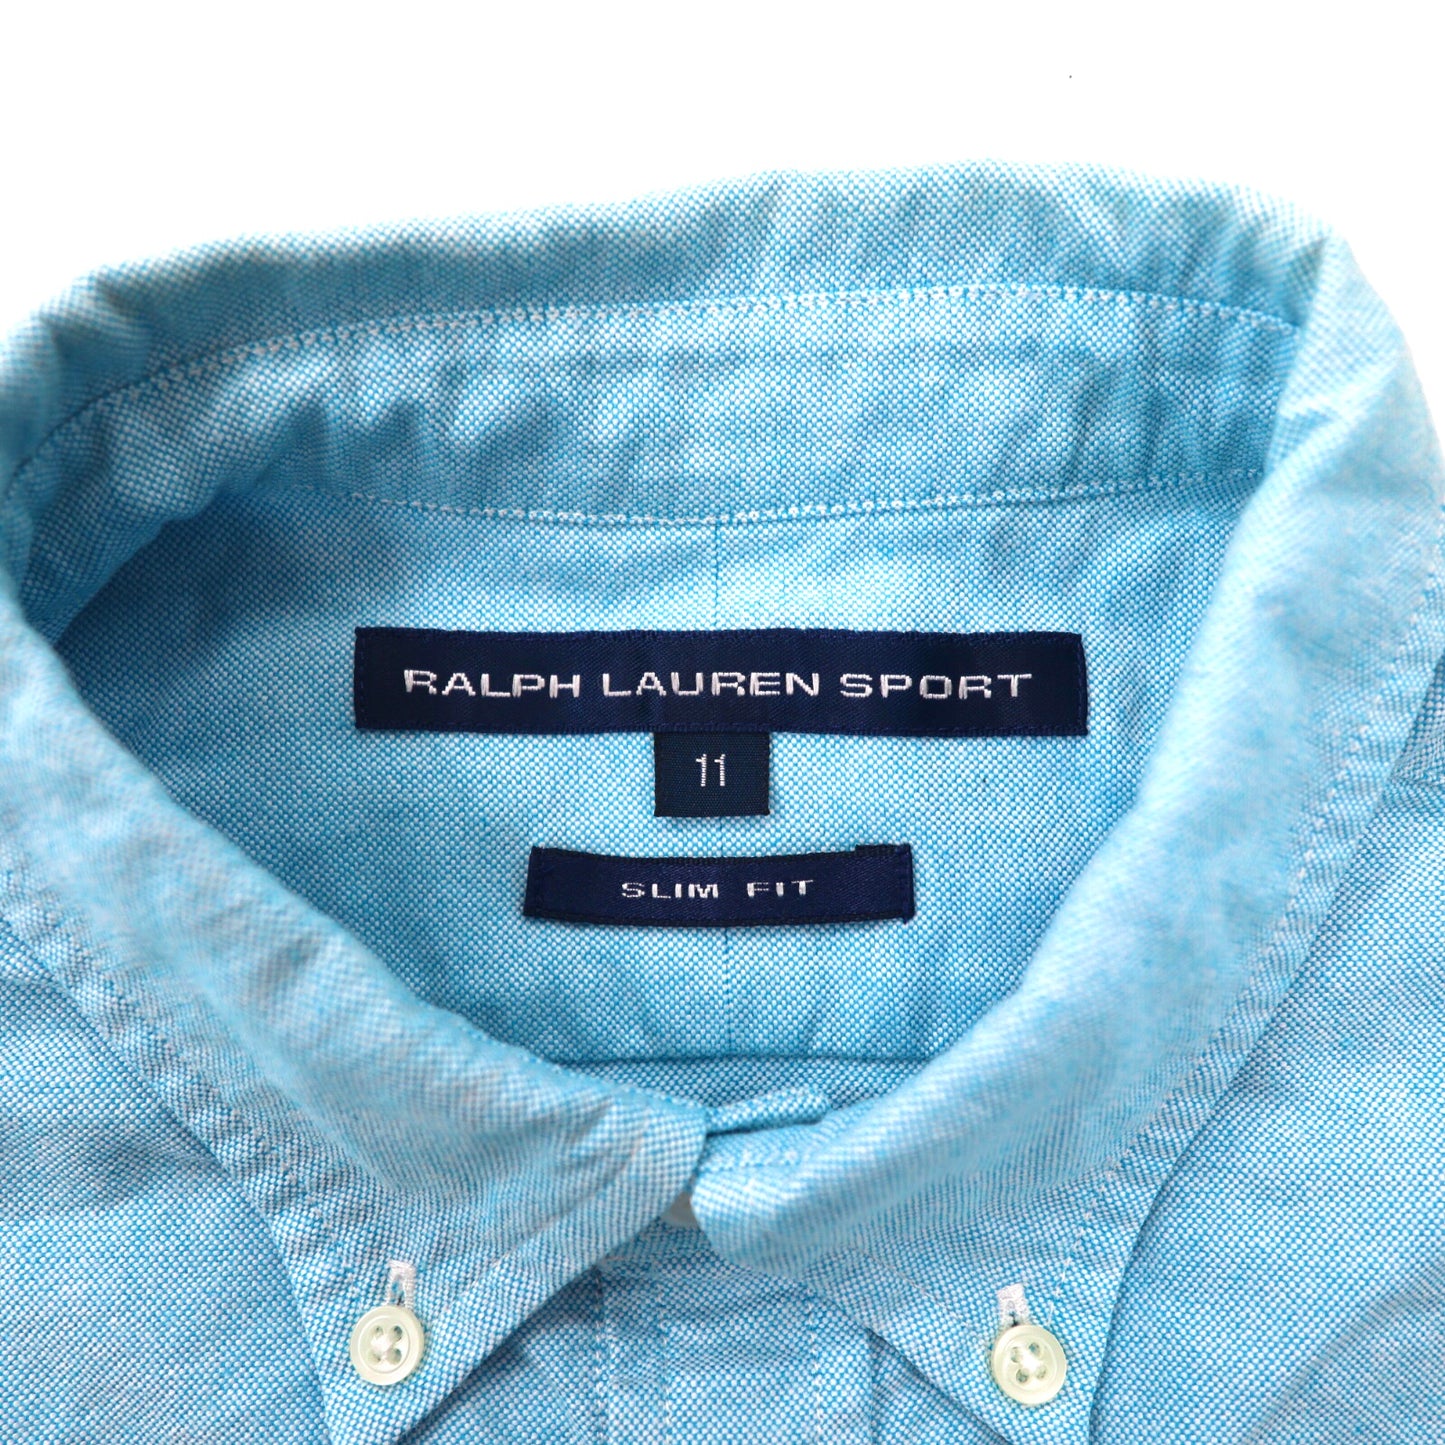 RALPH LAUREN SPORT ボタンダウンシャツ 11 ブルー コットン SLIM FIT スモールポニー刺繍